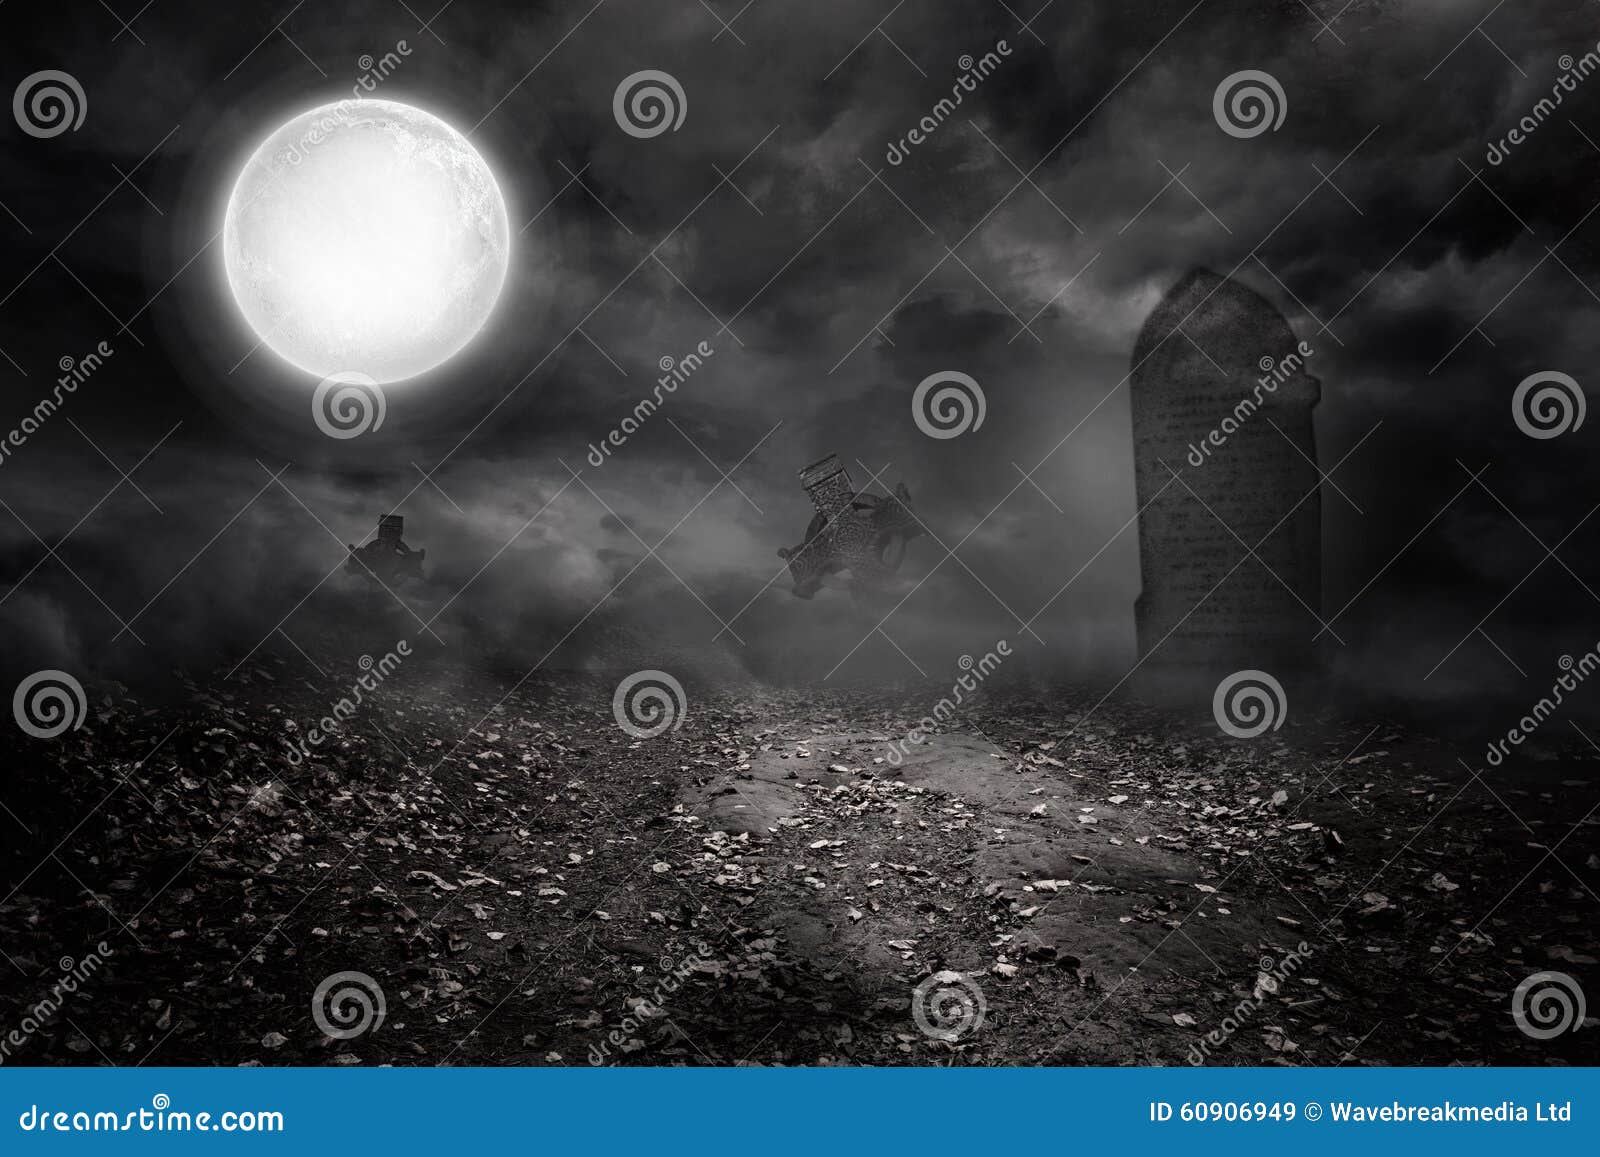 graveyard under the full moon